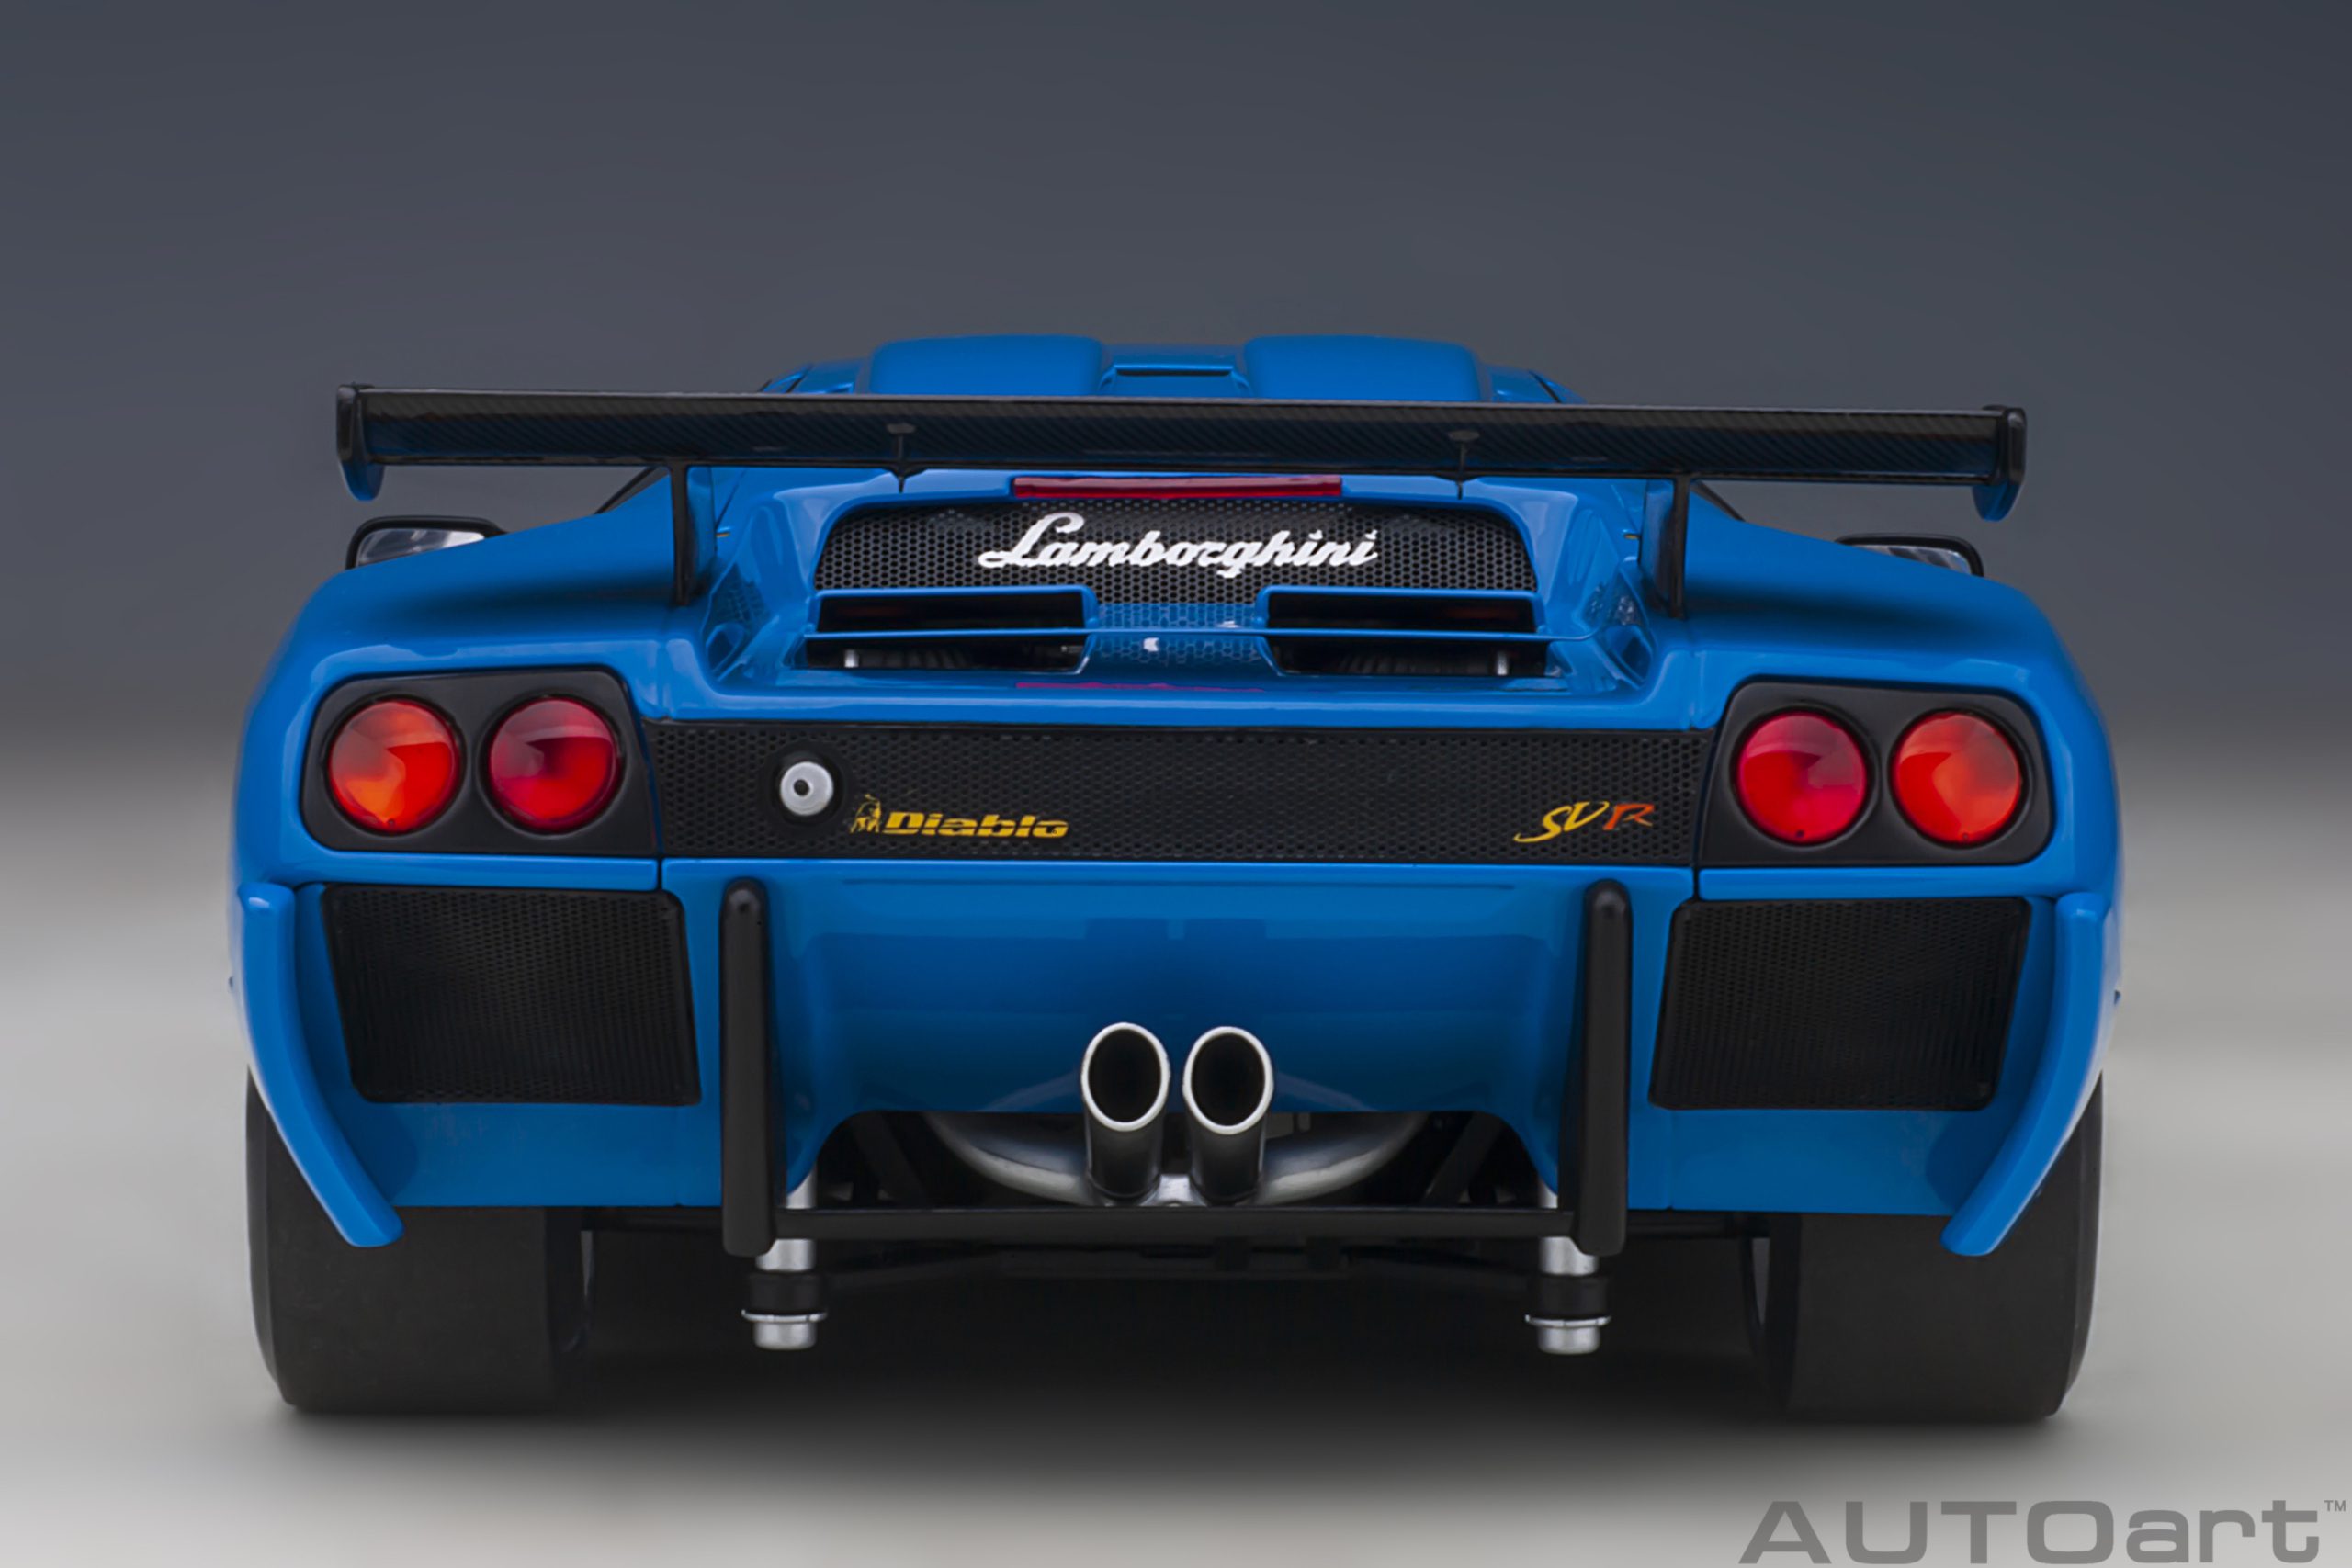 autoart-79148-8-Lamborghini-Diablo-SV-R-Blu-Le-Mans